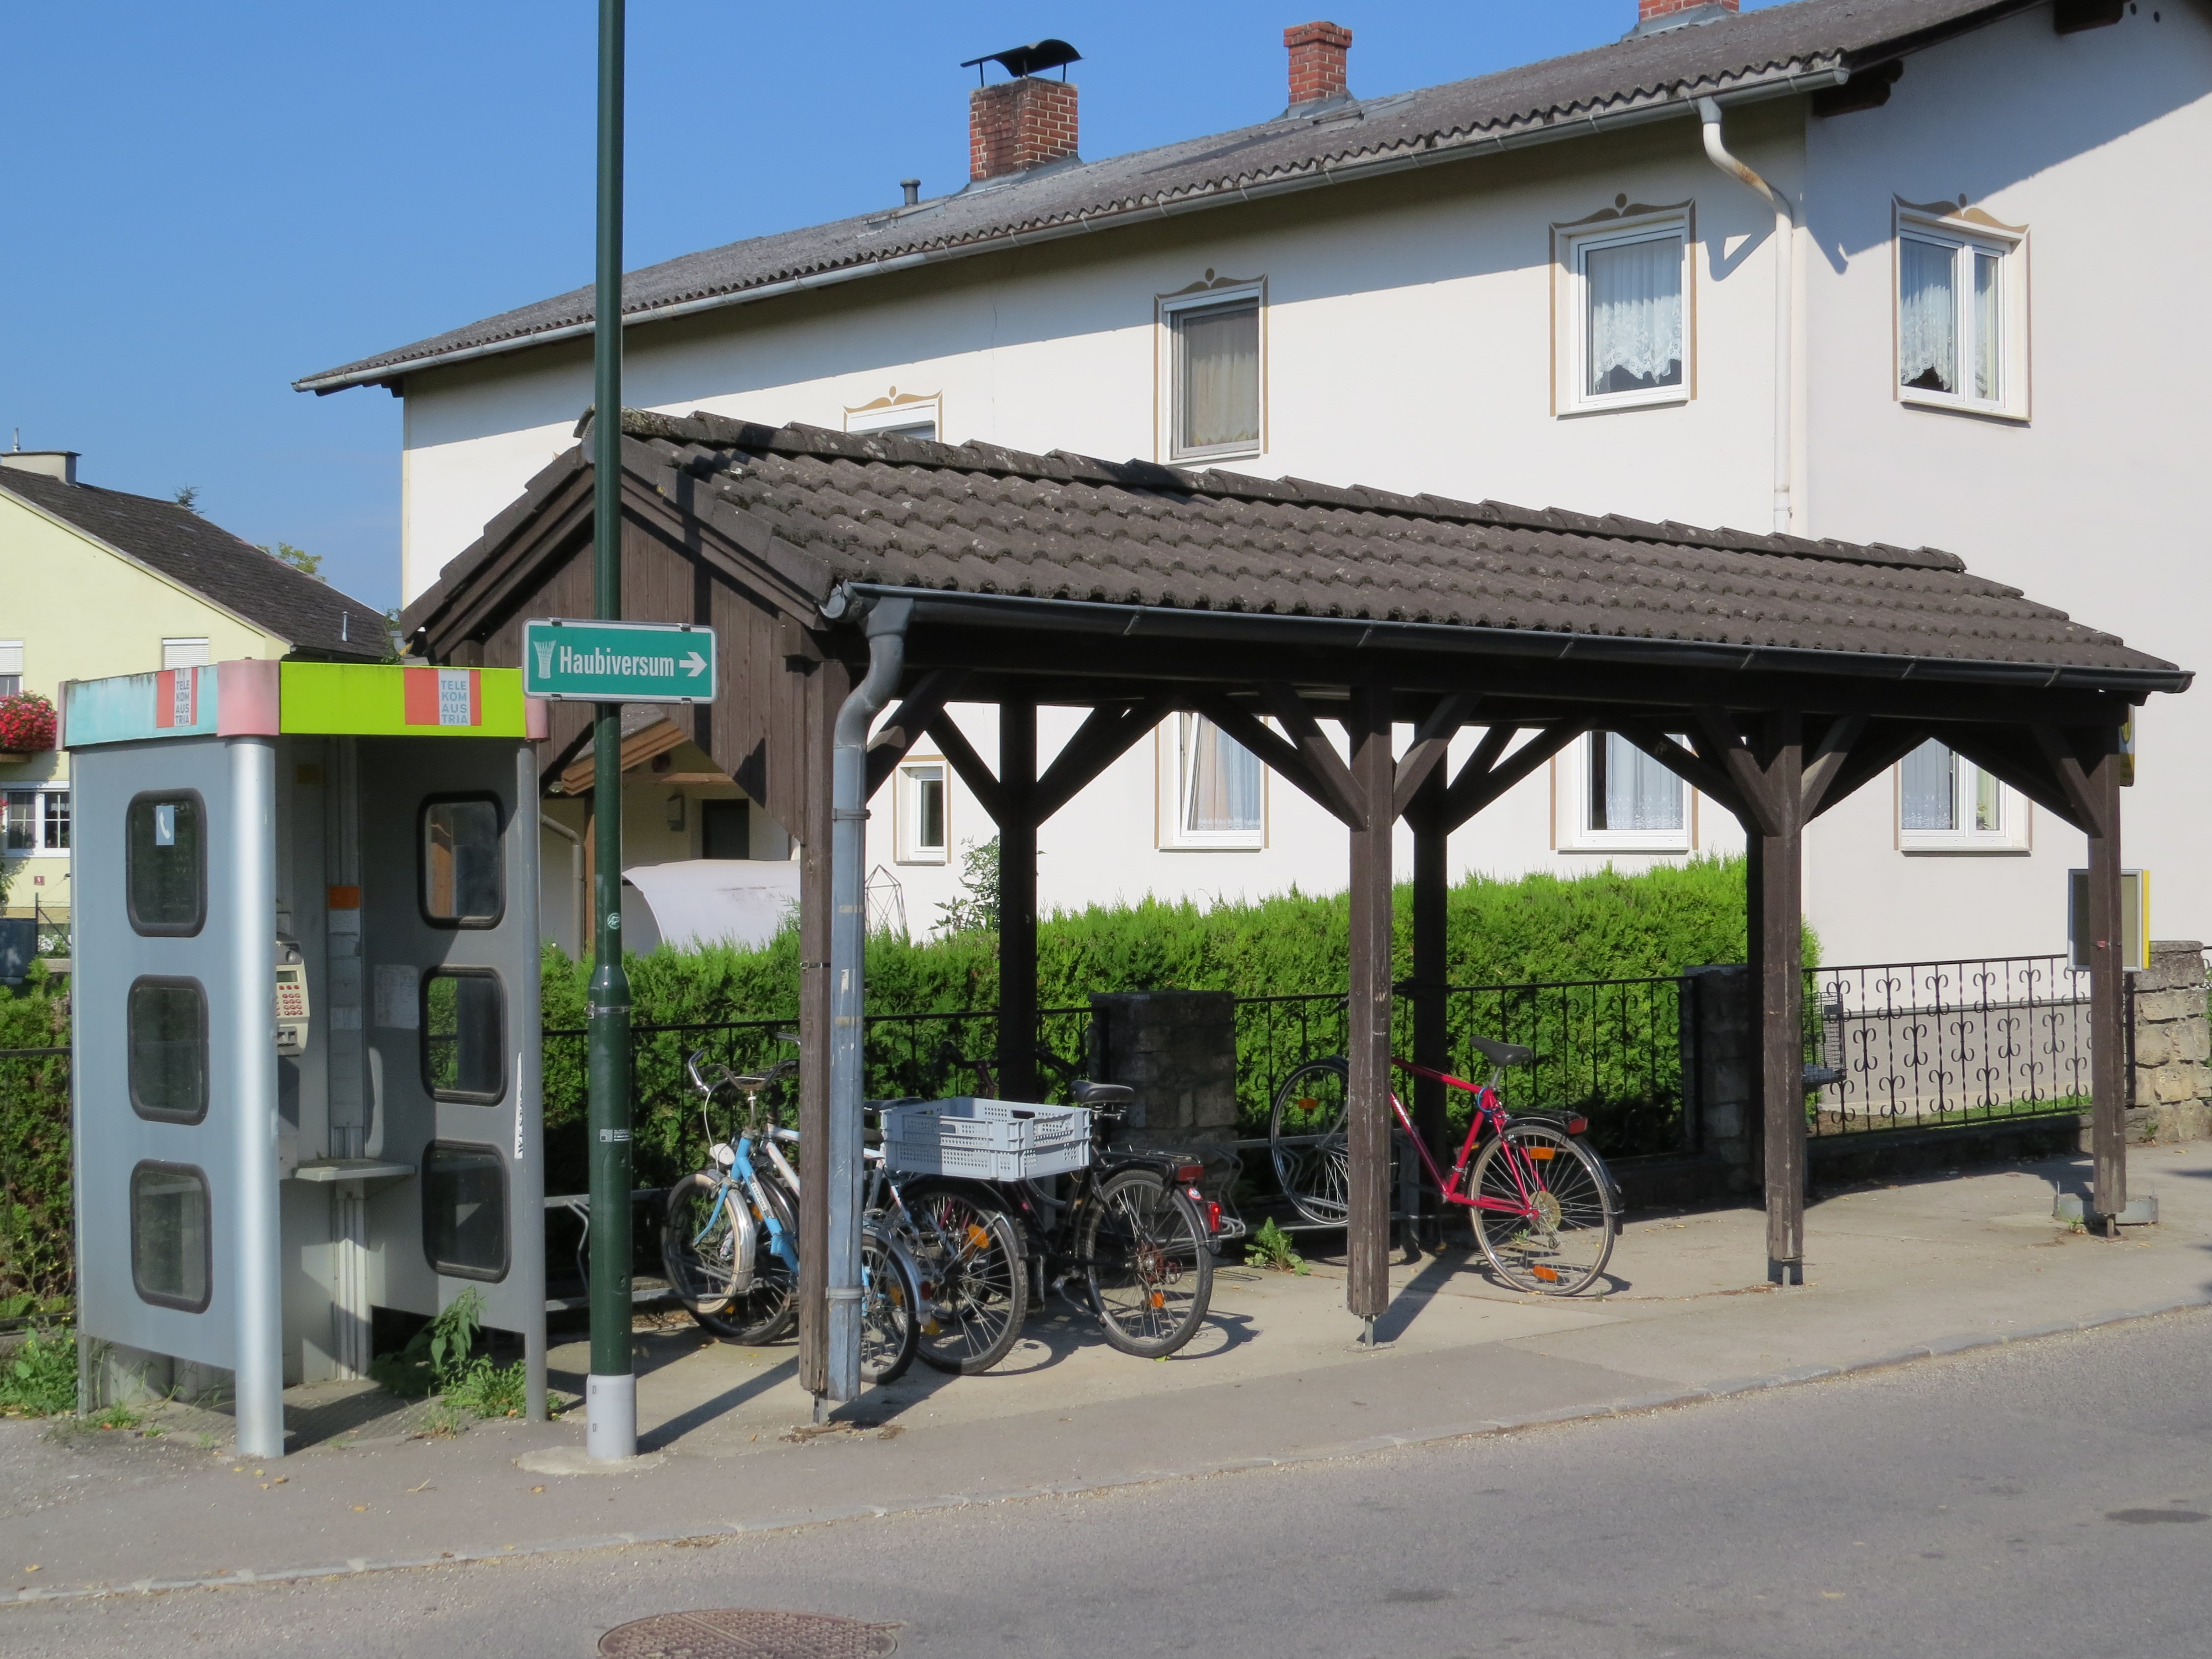 2018-07-26 (260) Park and Ride at Bahnhof Petzenkirchen, Austria